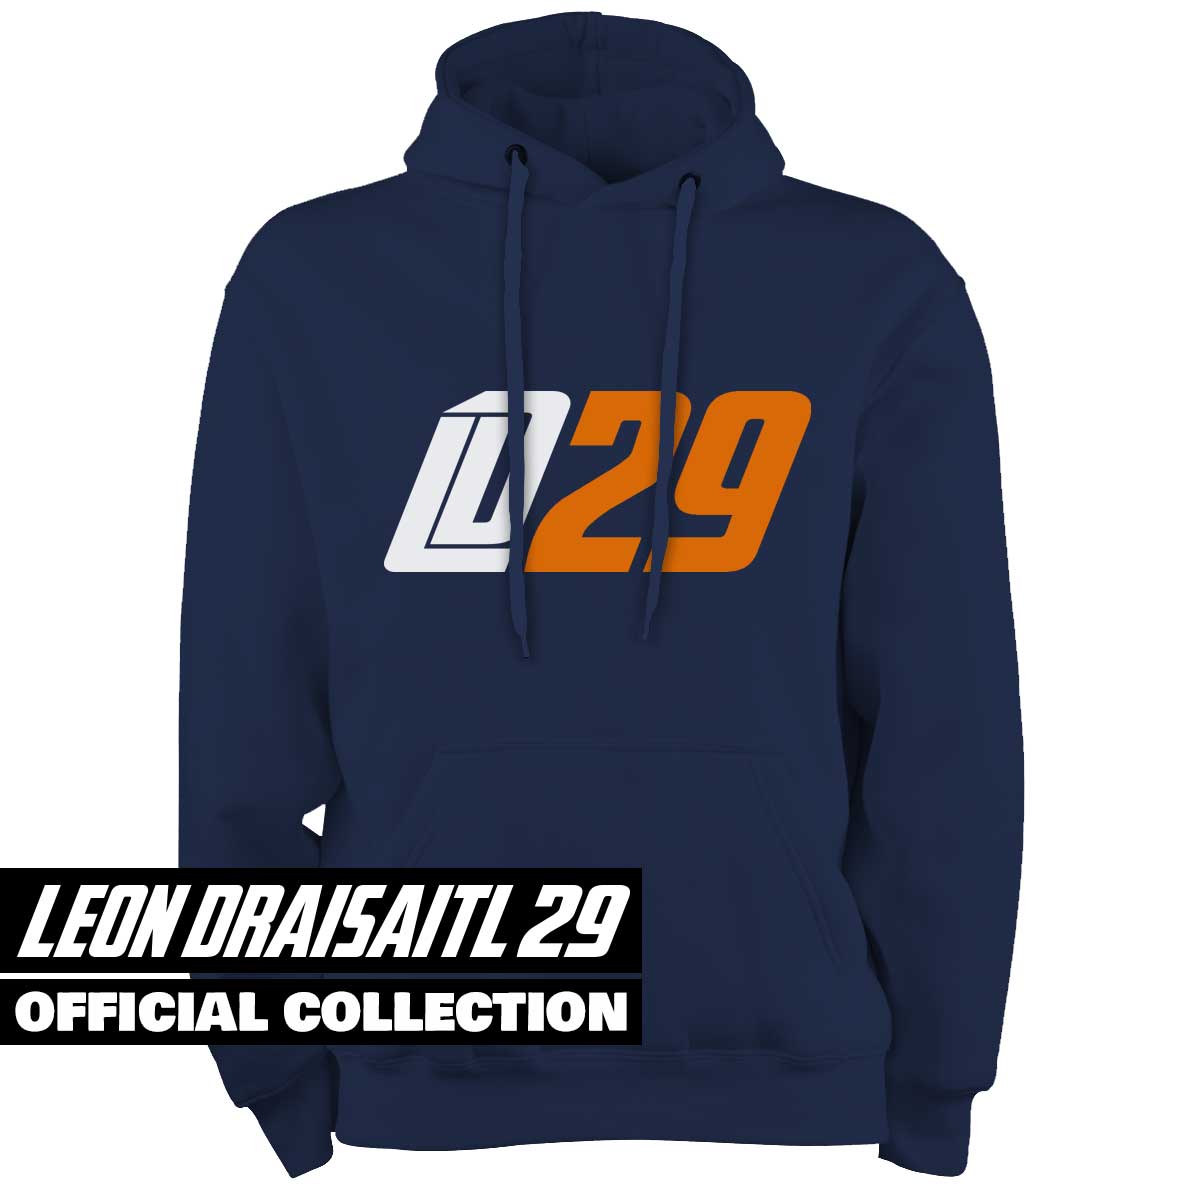 Leon Draisaitl Tasse offizielle SCALLYWAG® x LD29 Collection 